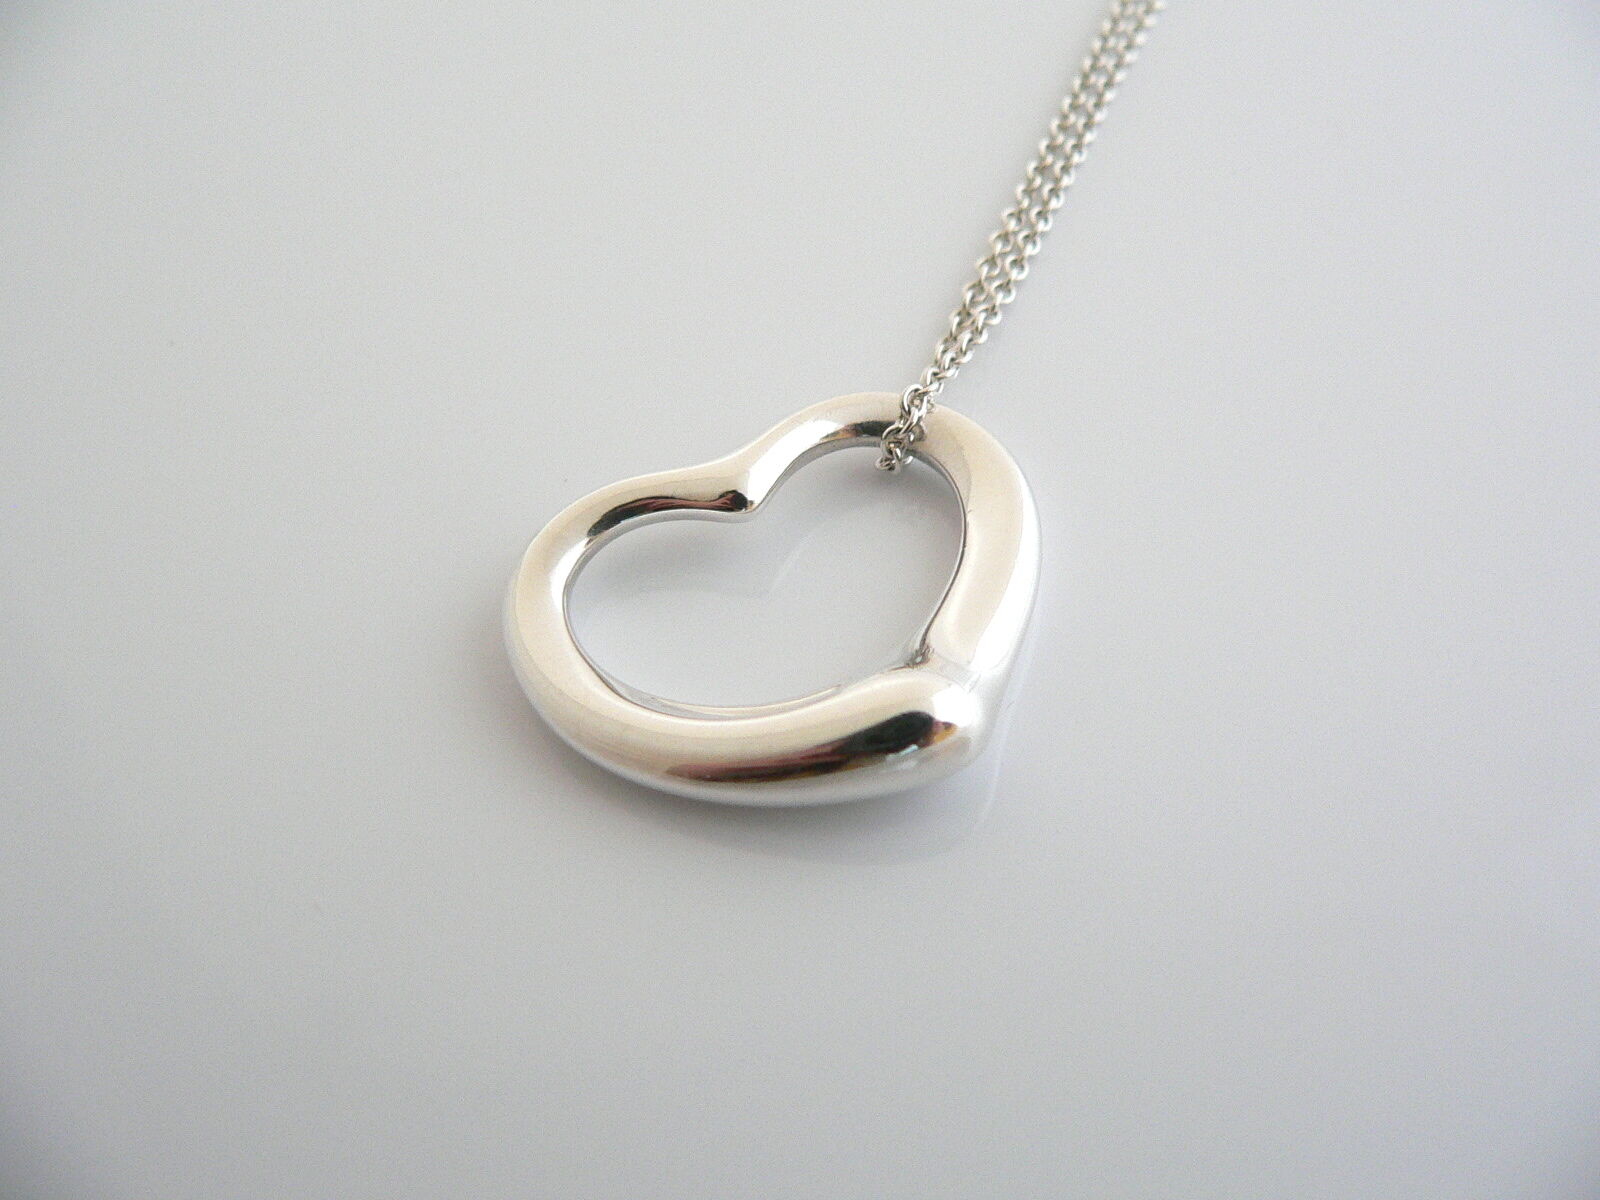 Tiffany & Co Silver Peretti Large Open Heart Necklace Pendant Chain Love Gift